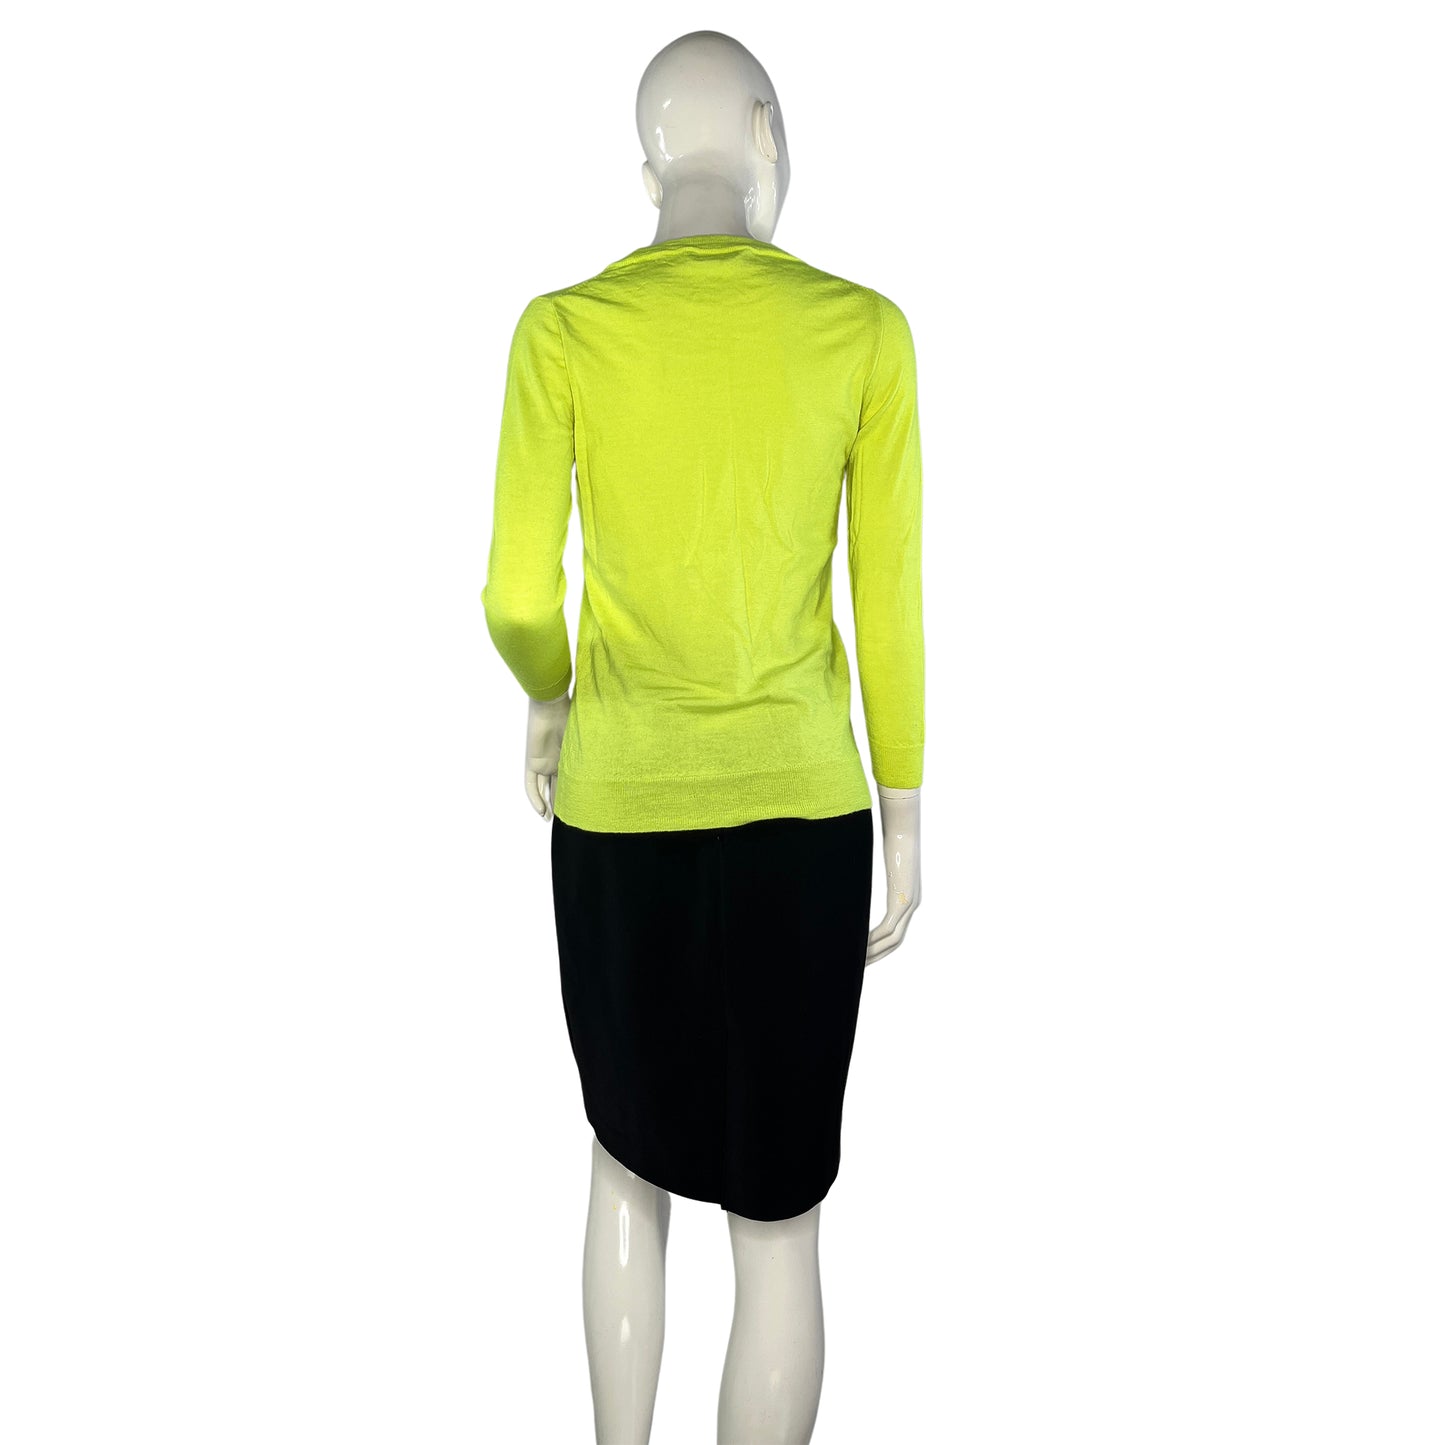 J. Crew Sweater Pull Over Neon Yellow Size S/ XS SKU 000226-2